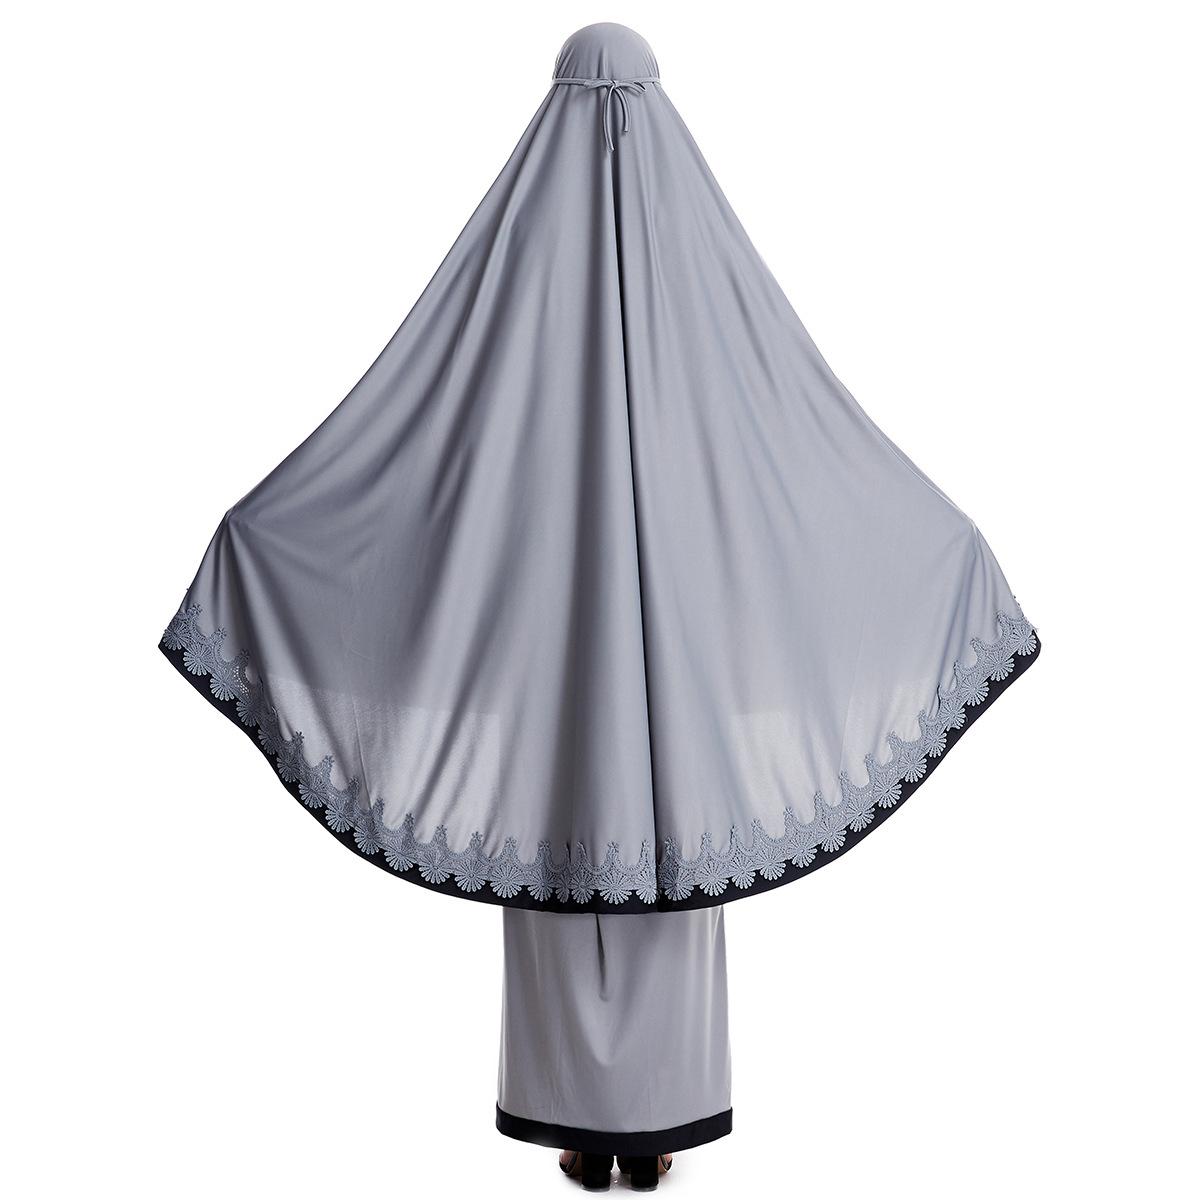 Ramadan Women 2 Piece Muslim Prayer Set Khimar Abaya Overhead Hijab+Skirt Full Cover Islam Clothing Middle East Worship Service